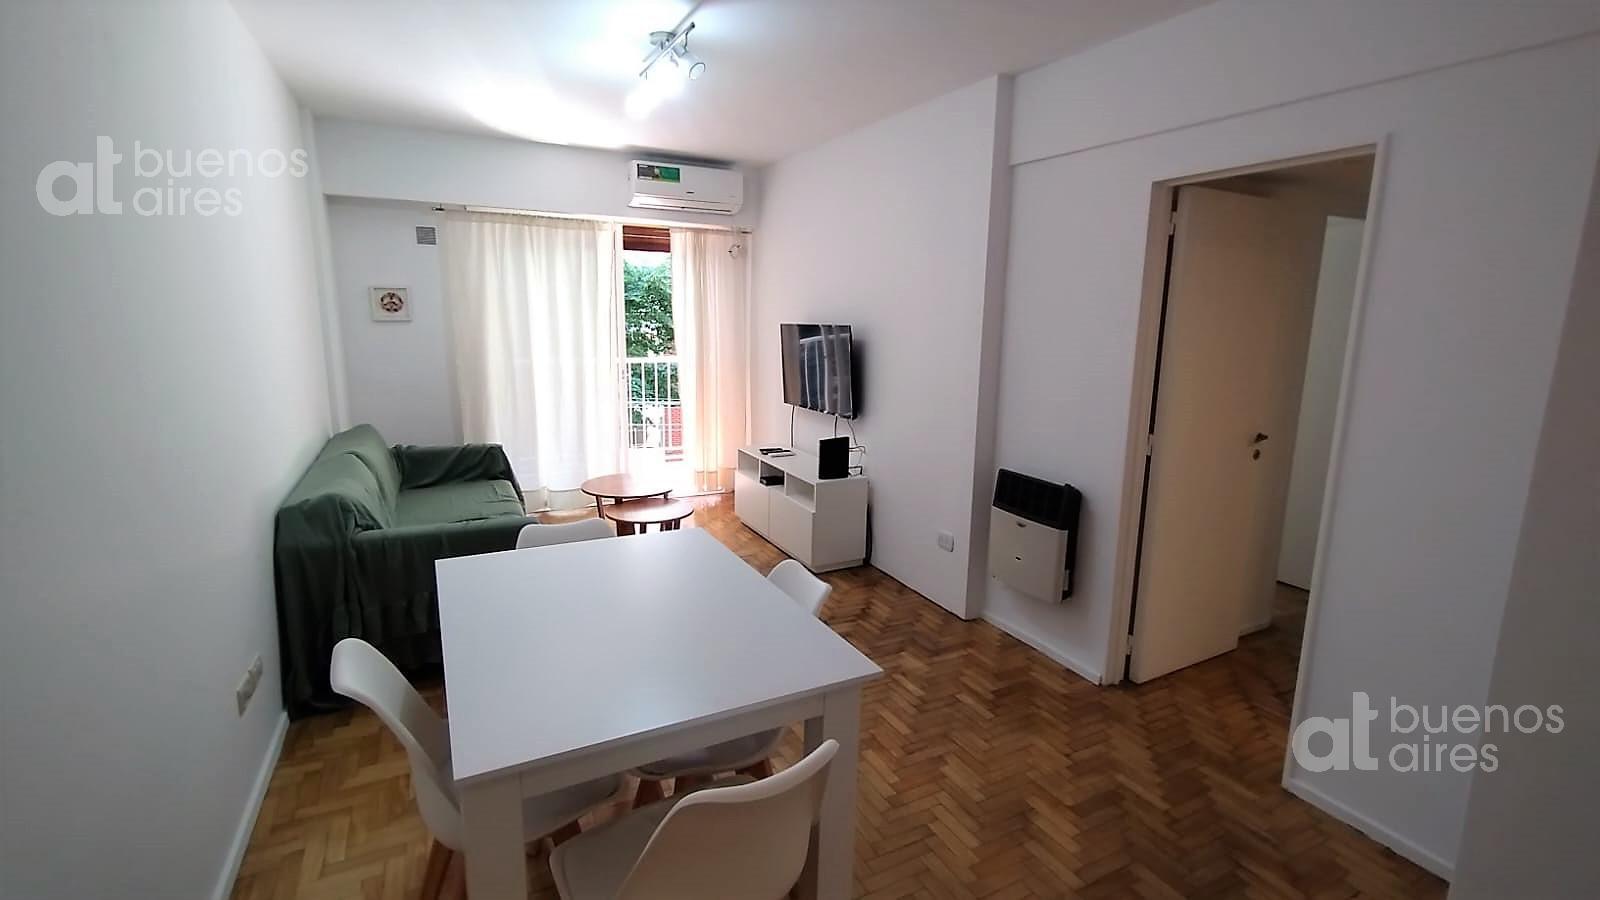 #5137277 | Temporary Rental | Apartment | Barrio Norte (At Buenos Aires)